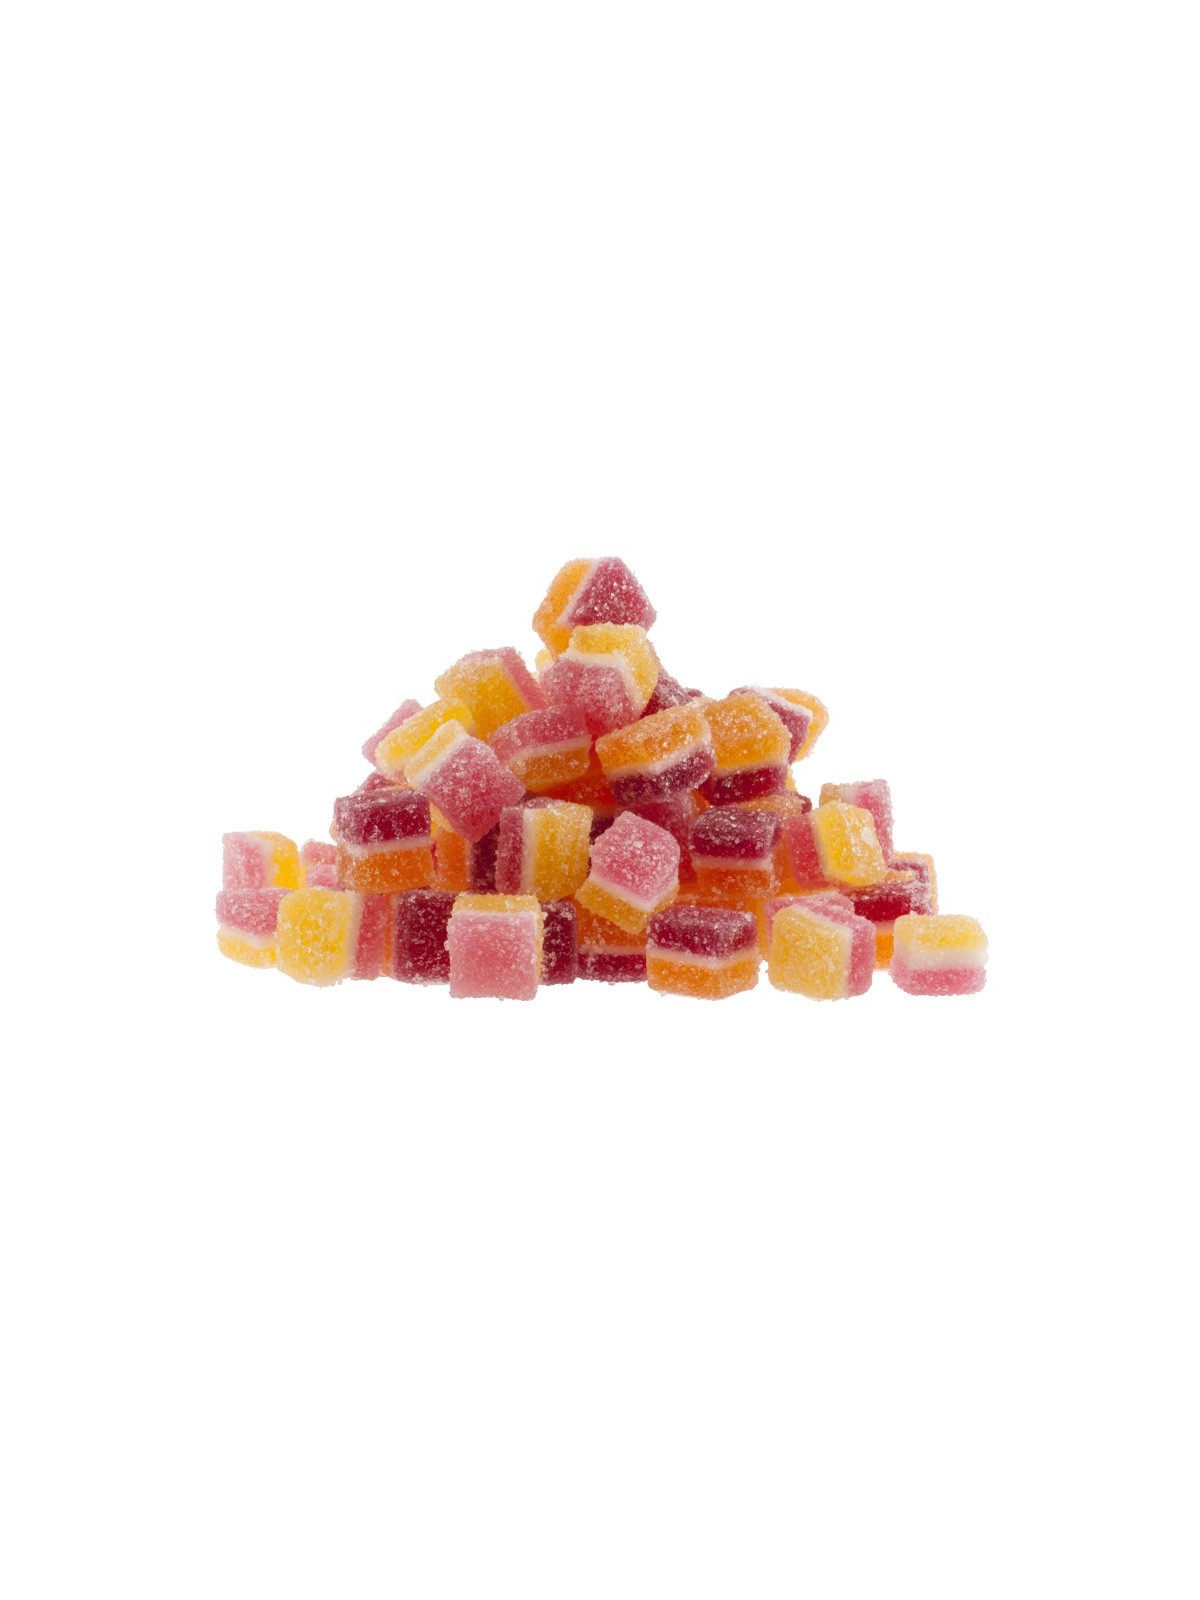 Jelly decor - mini 3-color cubes - 100g